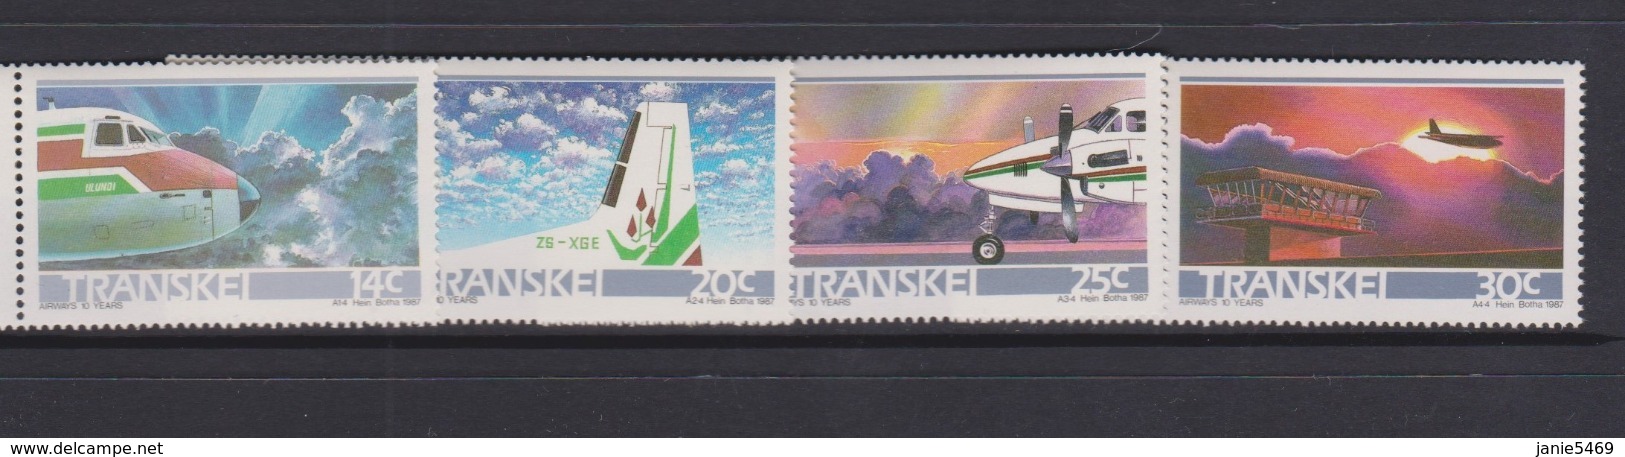 South Africa-Transkei SG 197-200 1987 10th Anniversary Airways,Mint Never Hinged - Venda